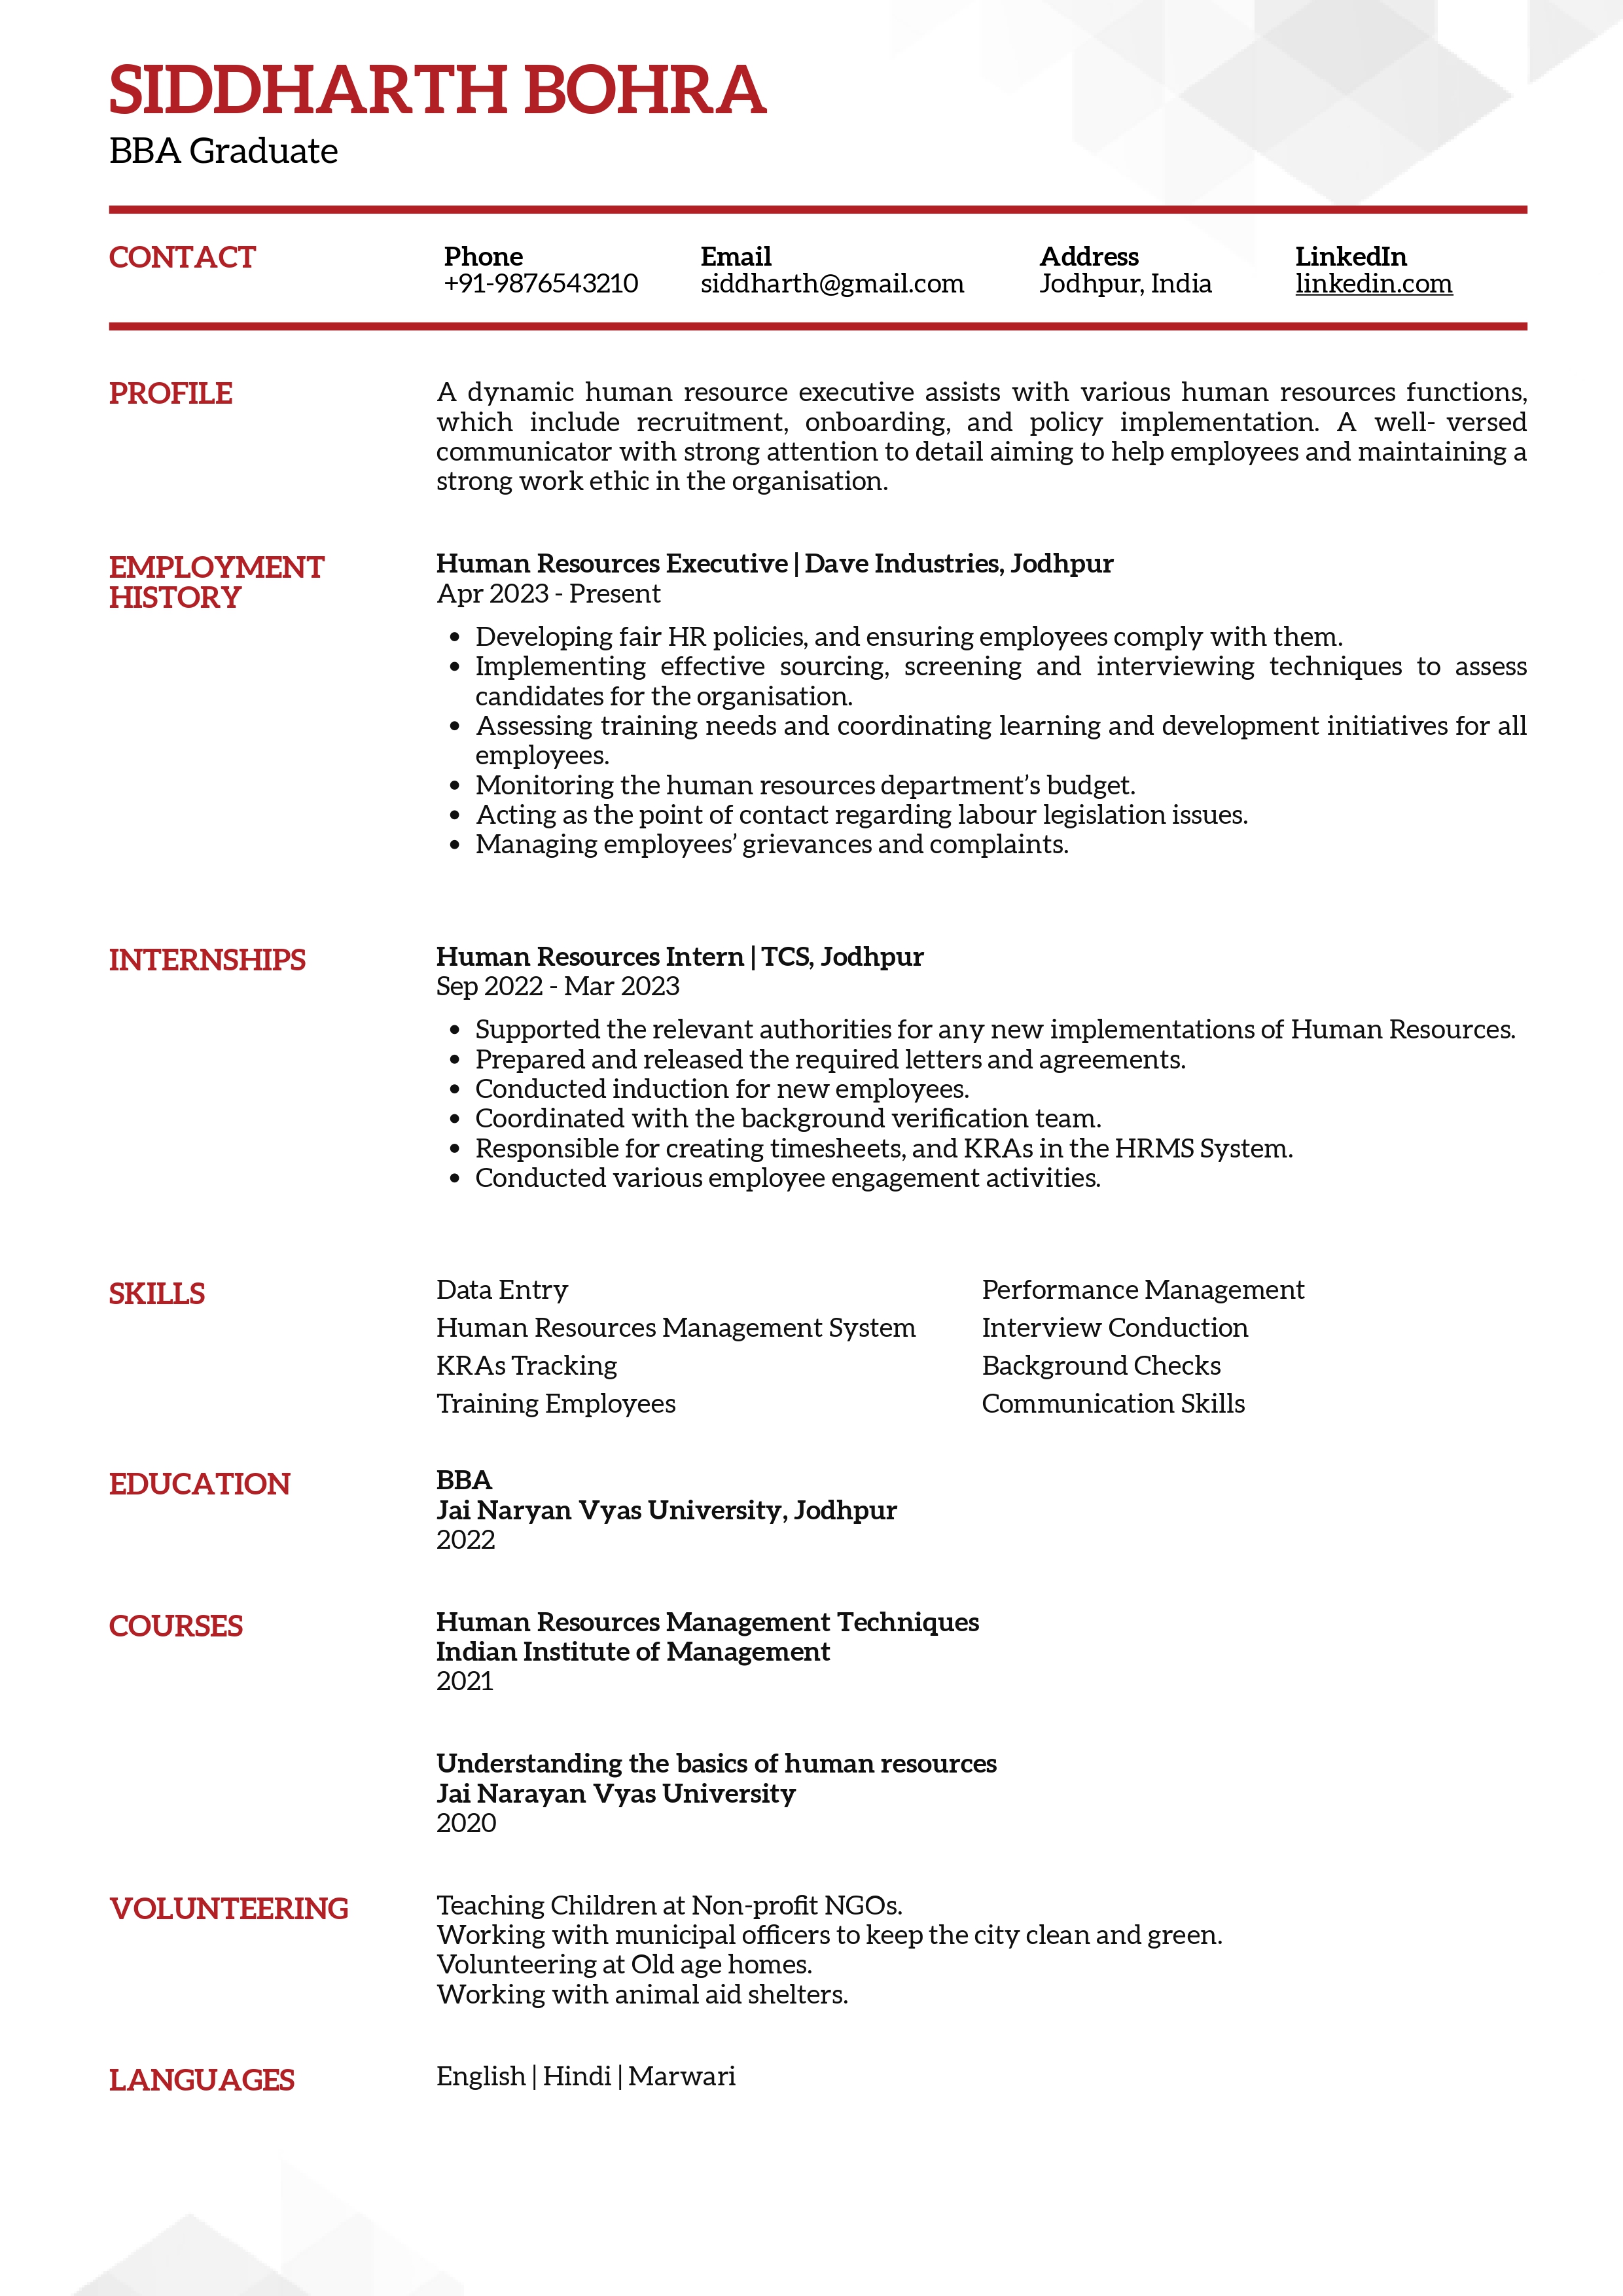 Sample Resume of BBA Graduate | Free Resume Templates & Samples on Resumod.co